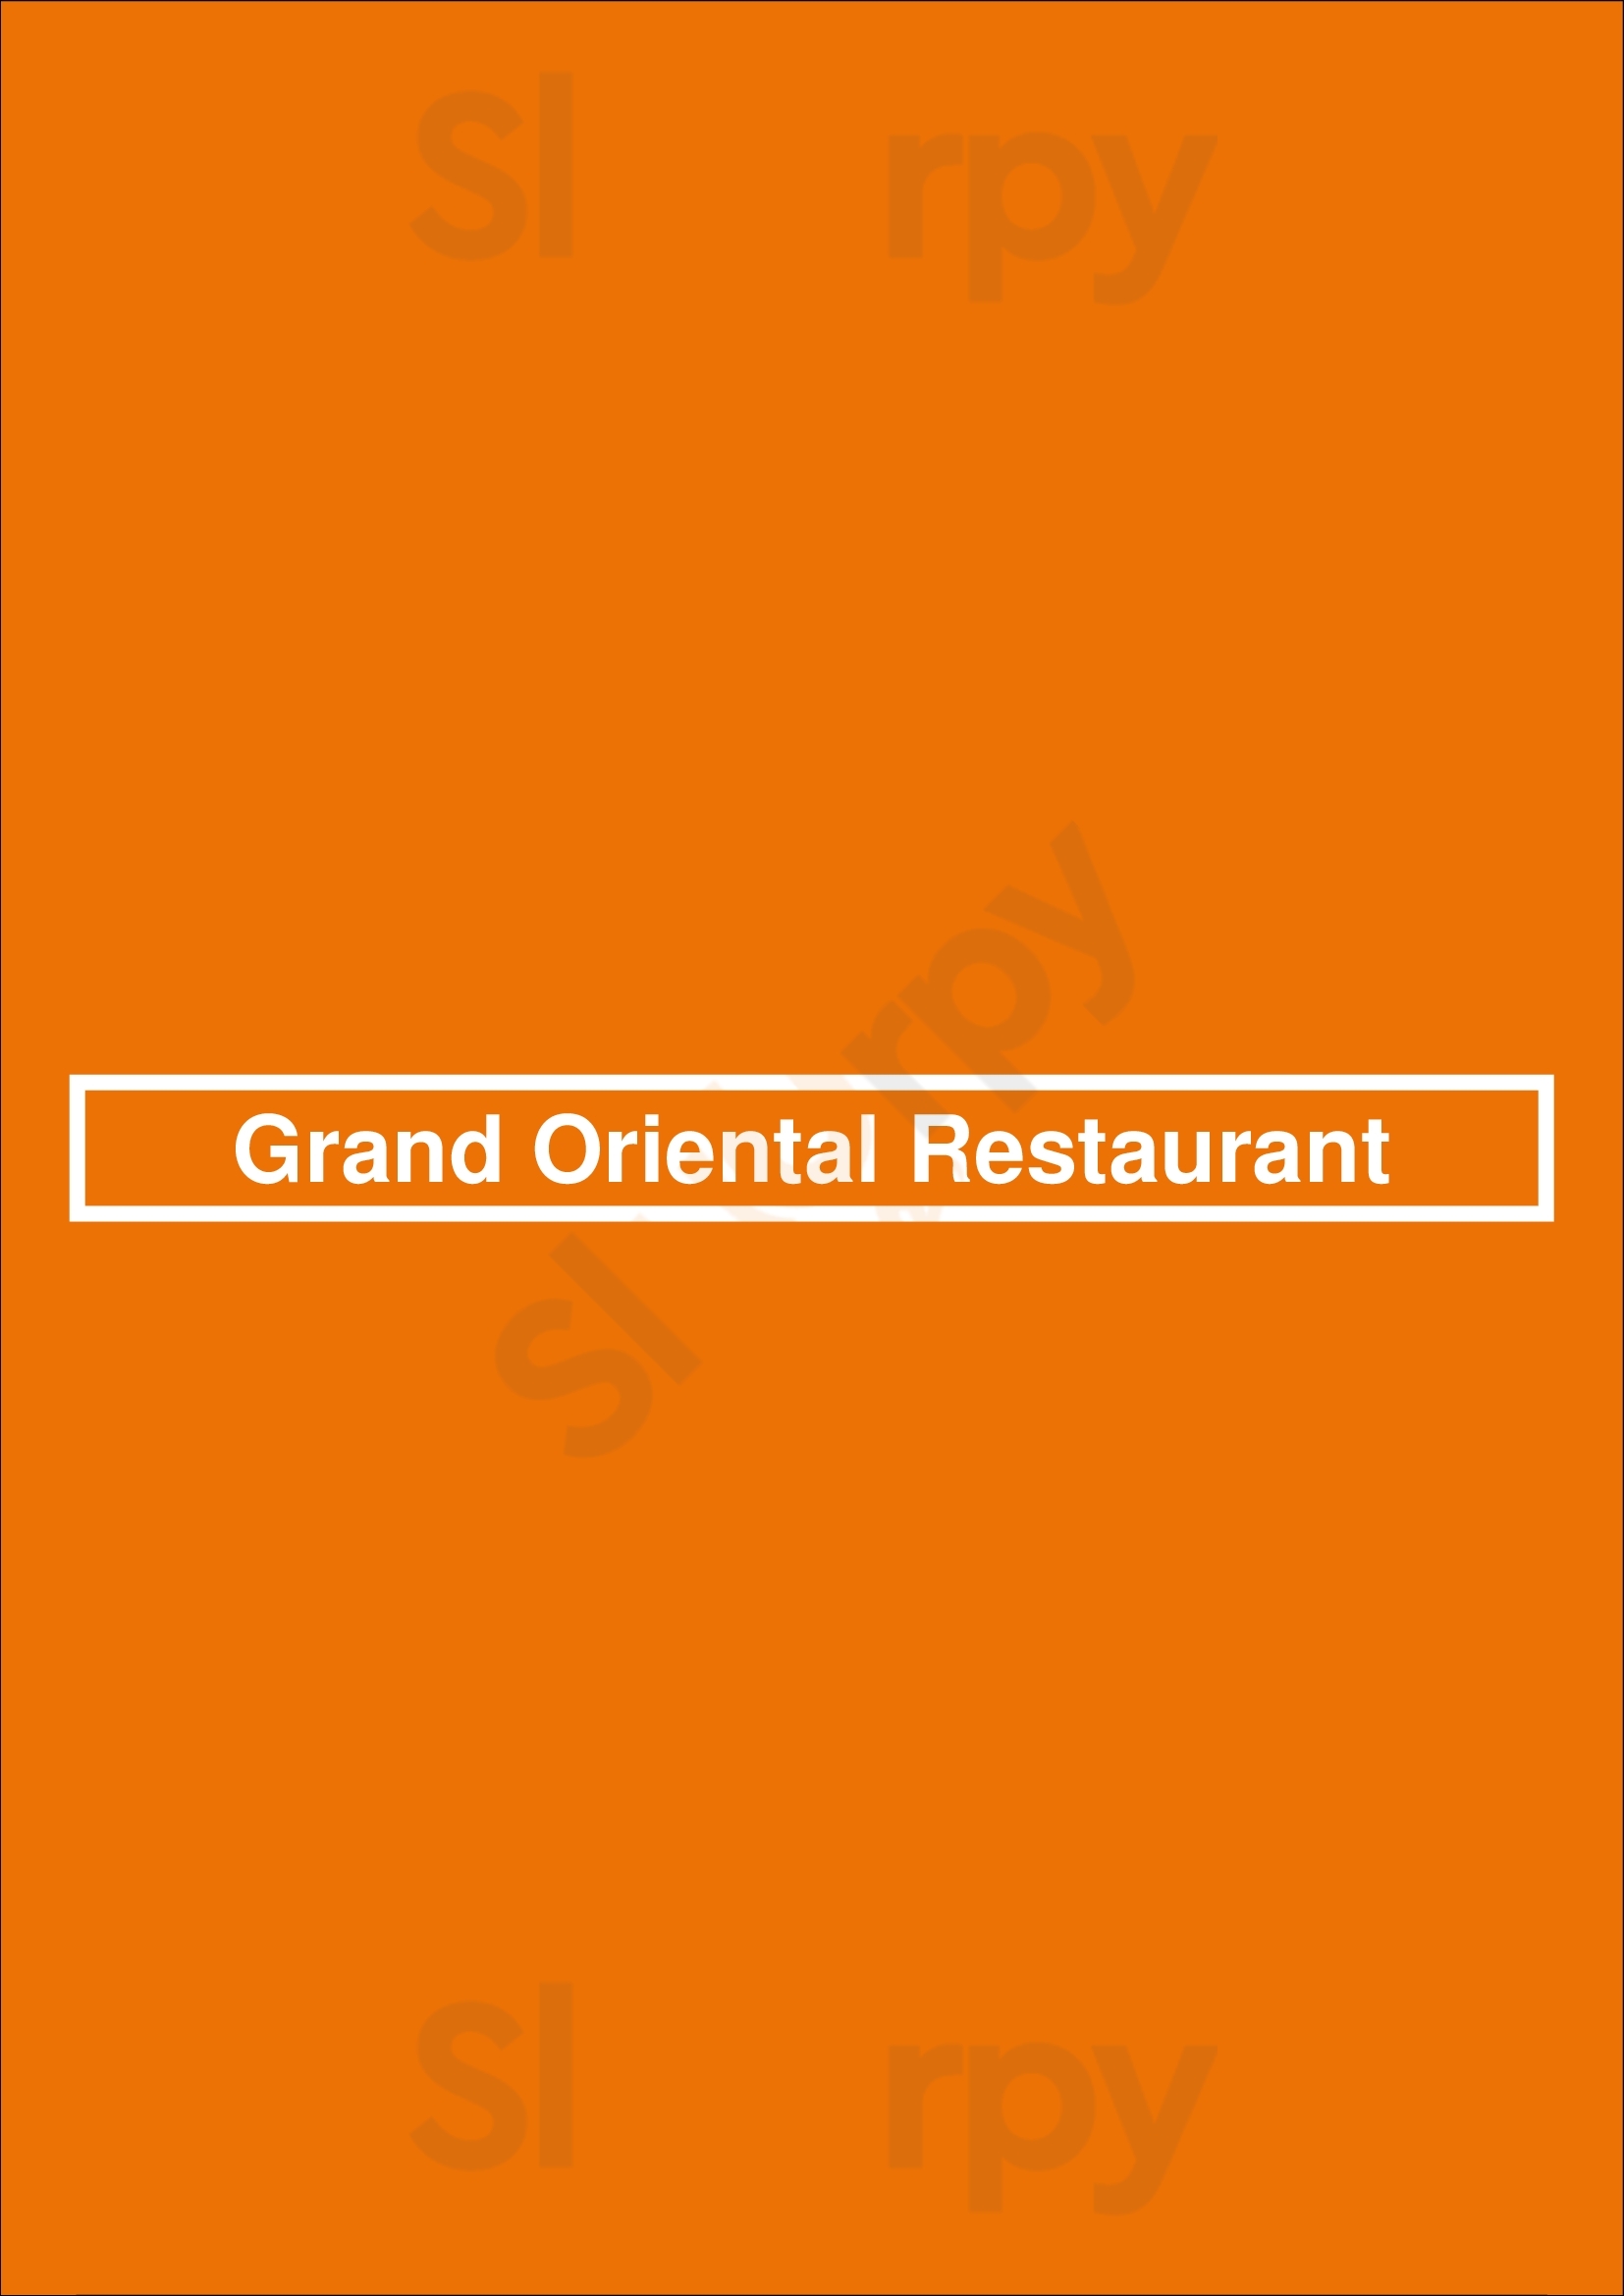 Grand Oriental Restaurant Cincinnati Menu - 1